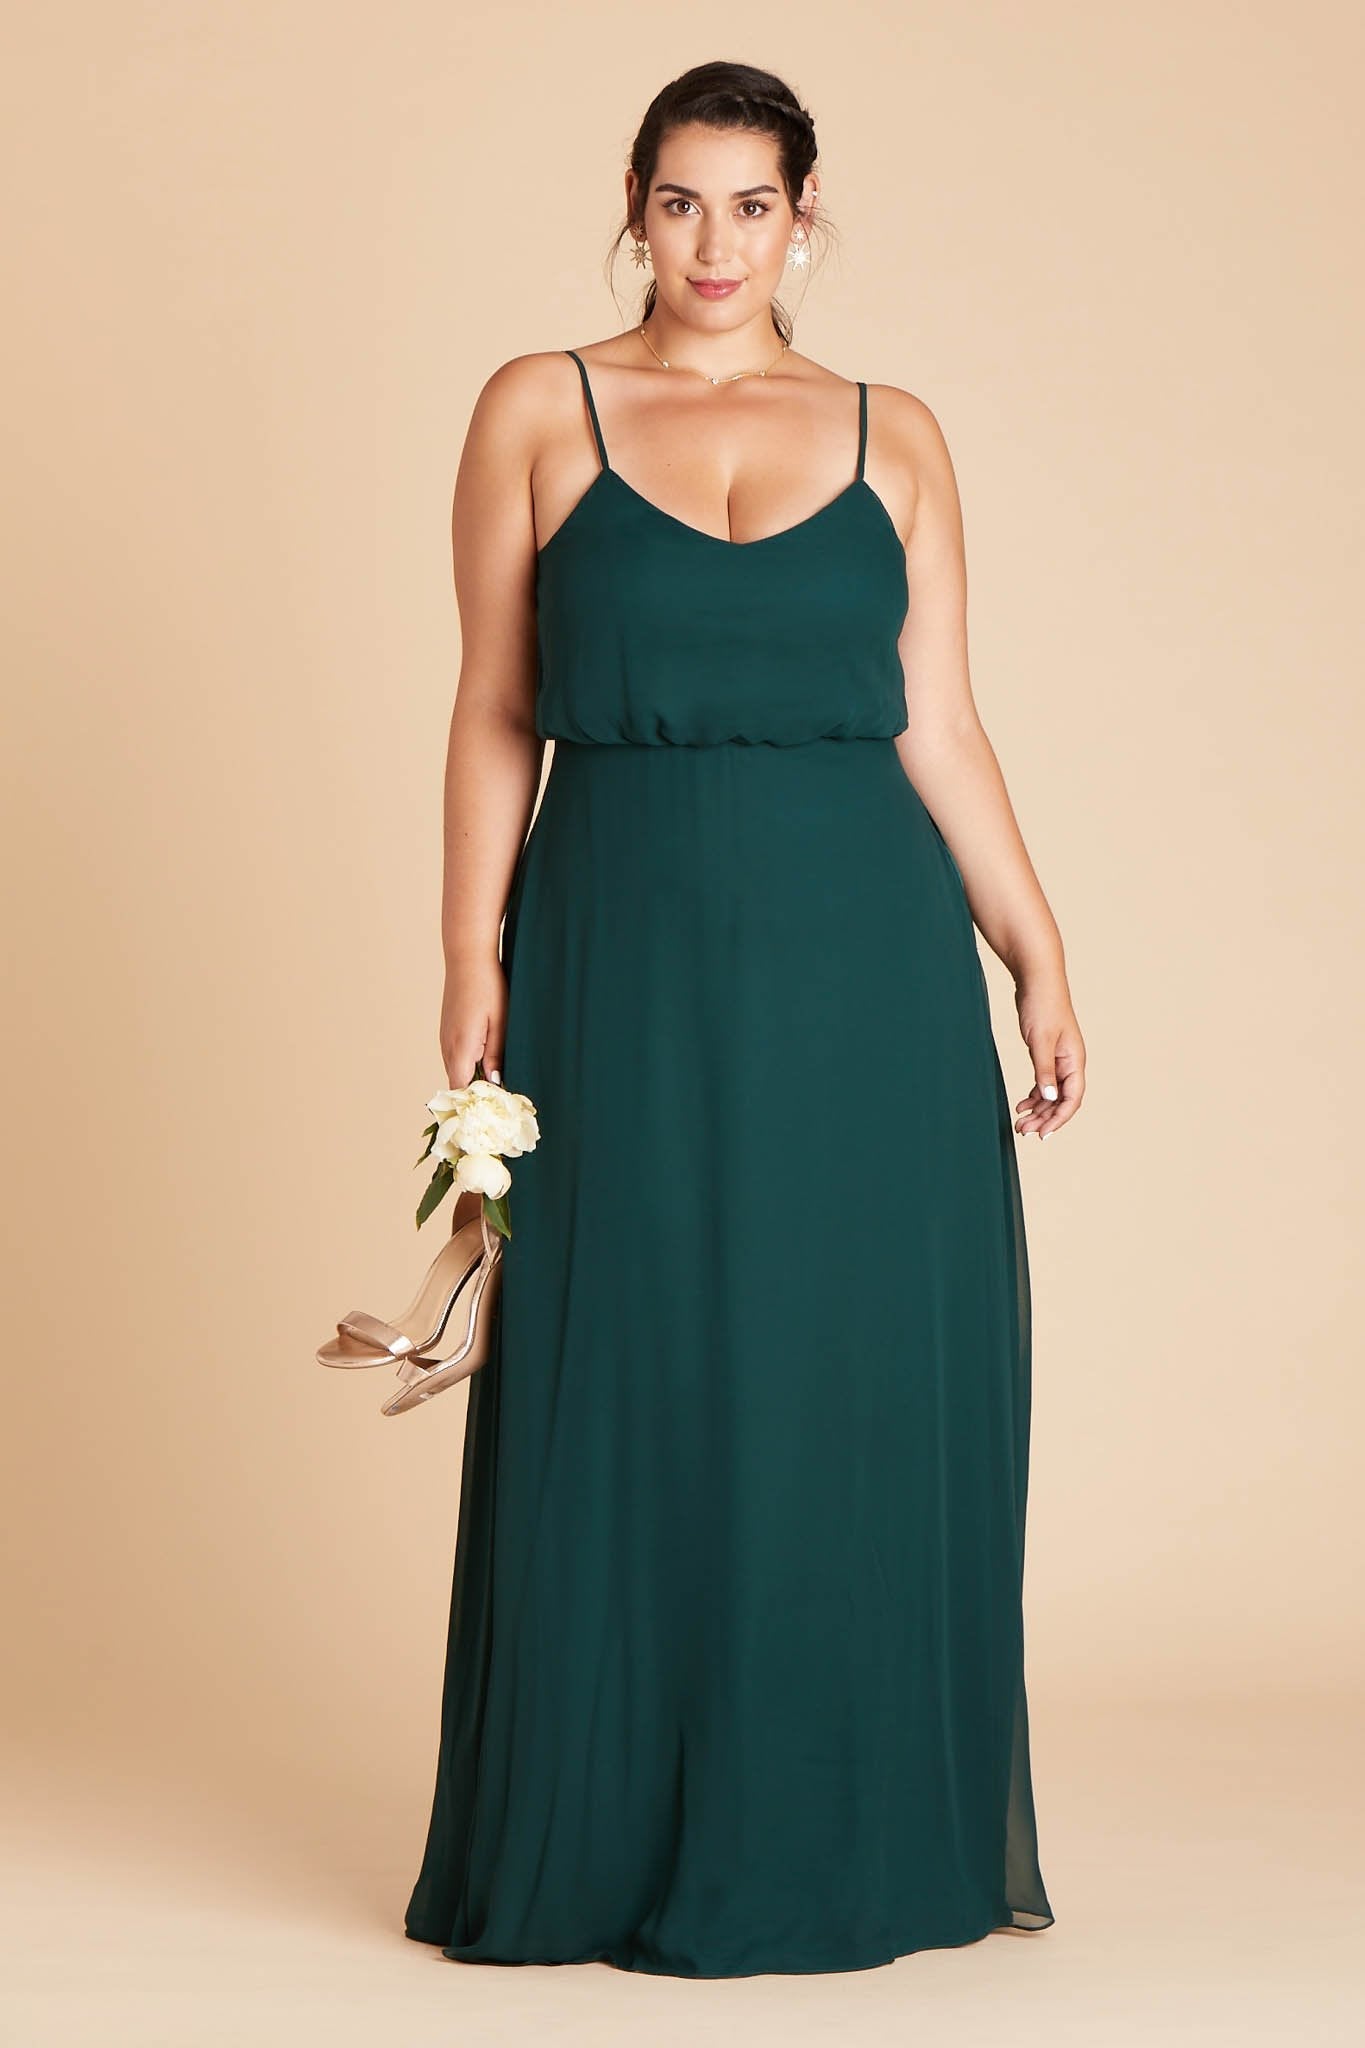 Gwennie plus size bridesmaid dress in emerald green chiffon by Birdy Grey, front view